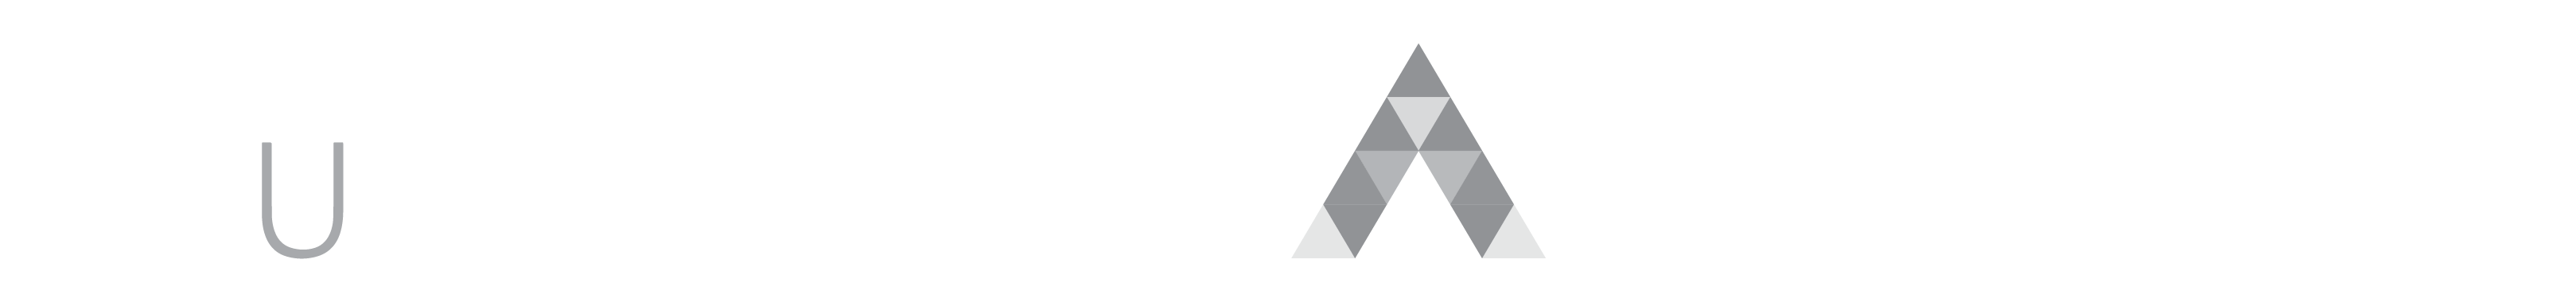 Lumigraphics Logo